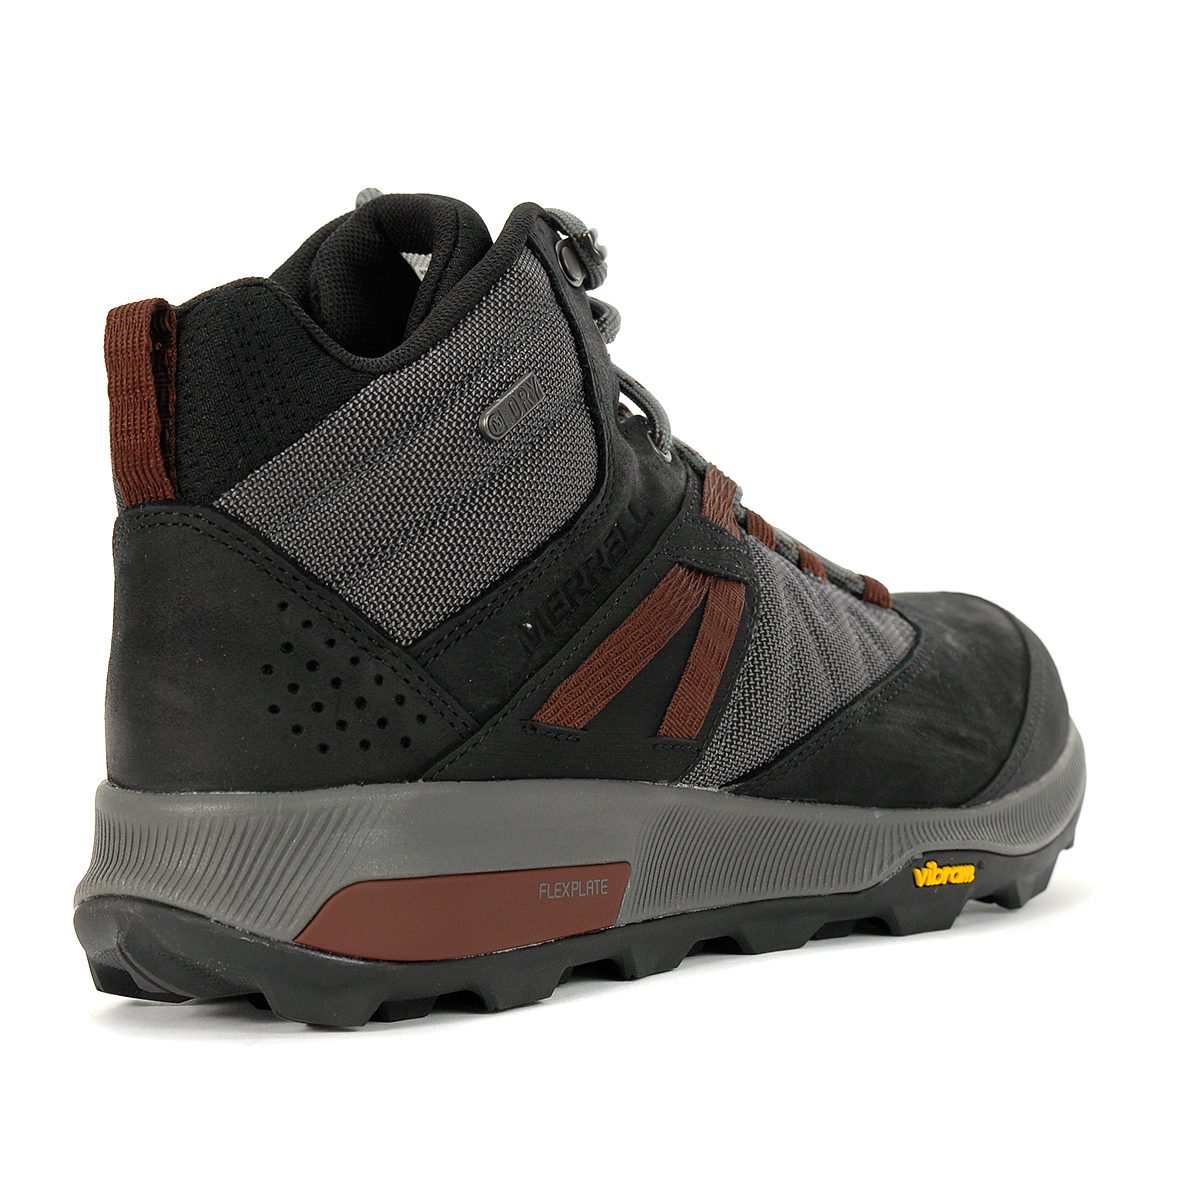 Merrell Men's Annex Trak Mid Waterproof Hiking Boot Winter Shoes Leather Vibram 